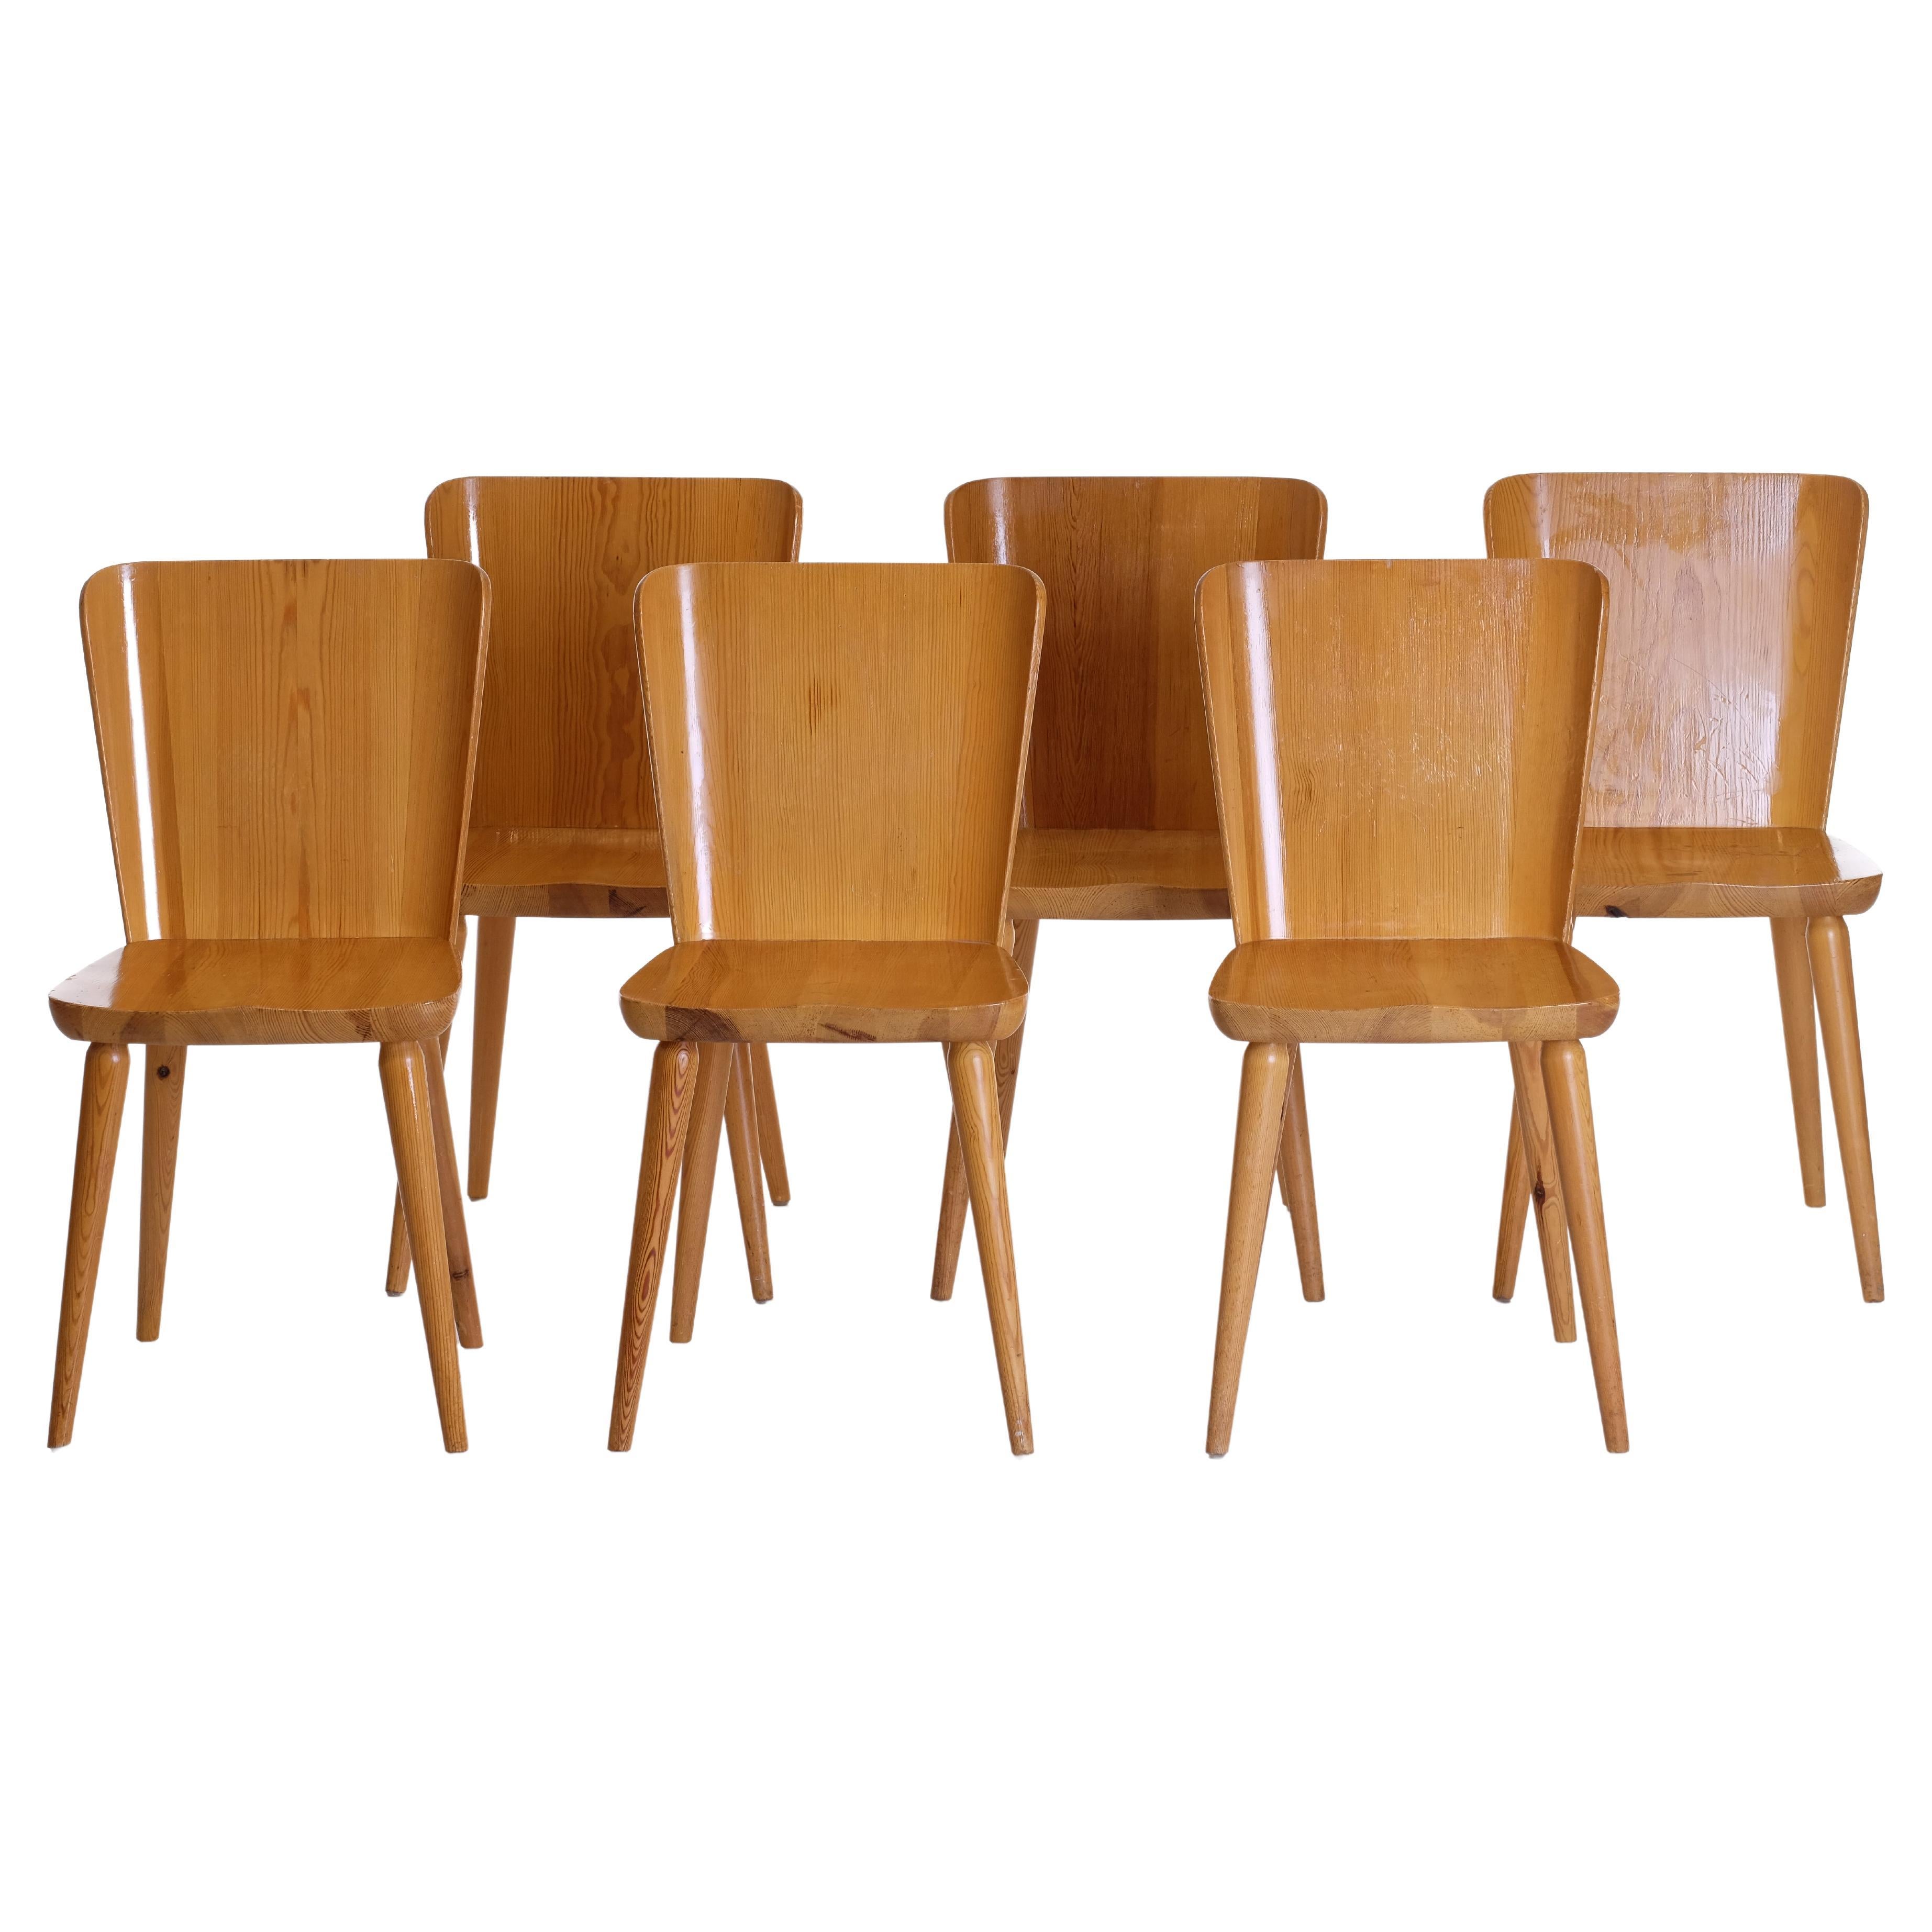 Set of 6 Swedish Pine Chairs by Göran Malmvall, Svensk Fur, 1960s